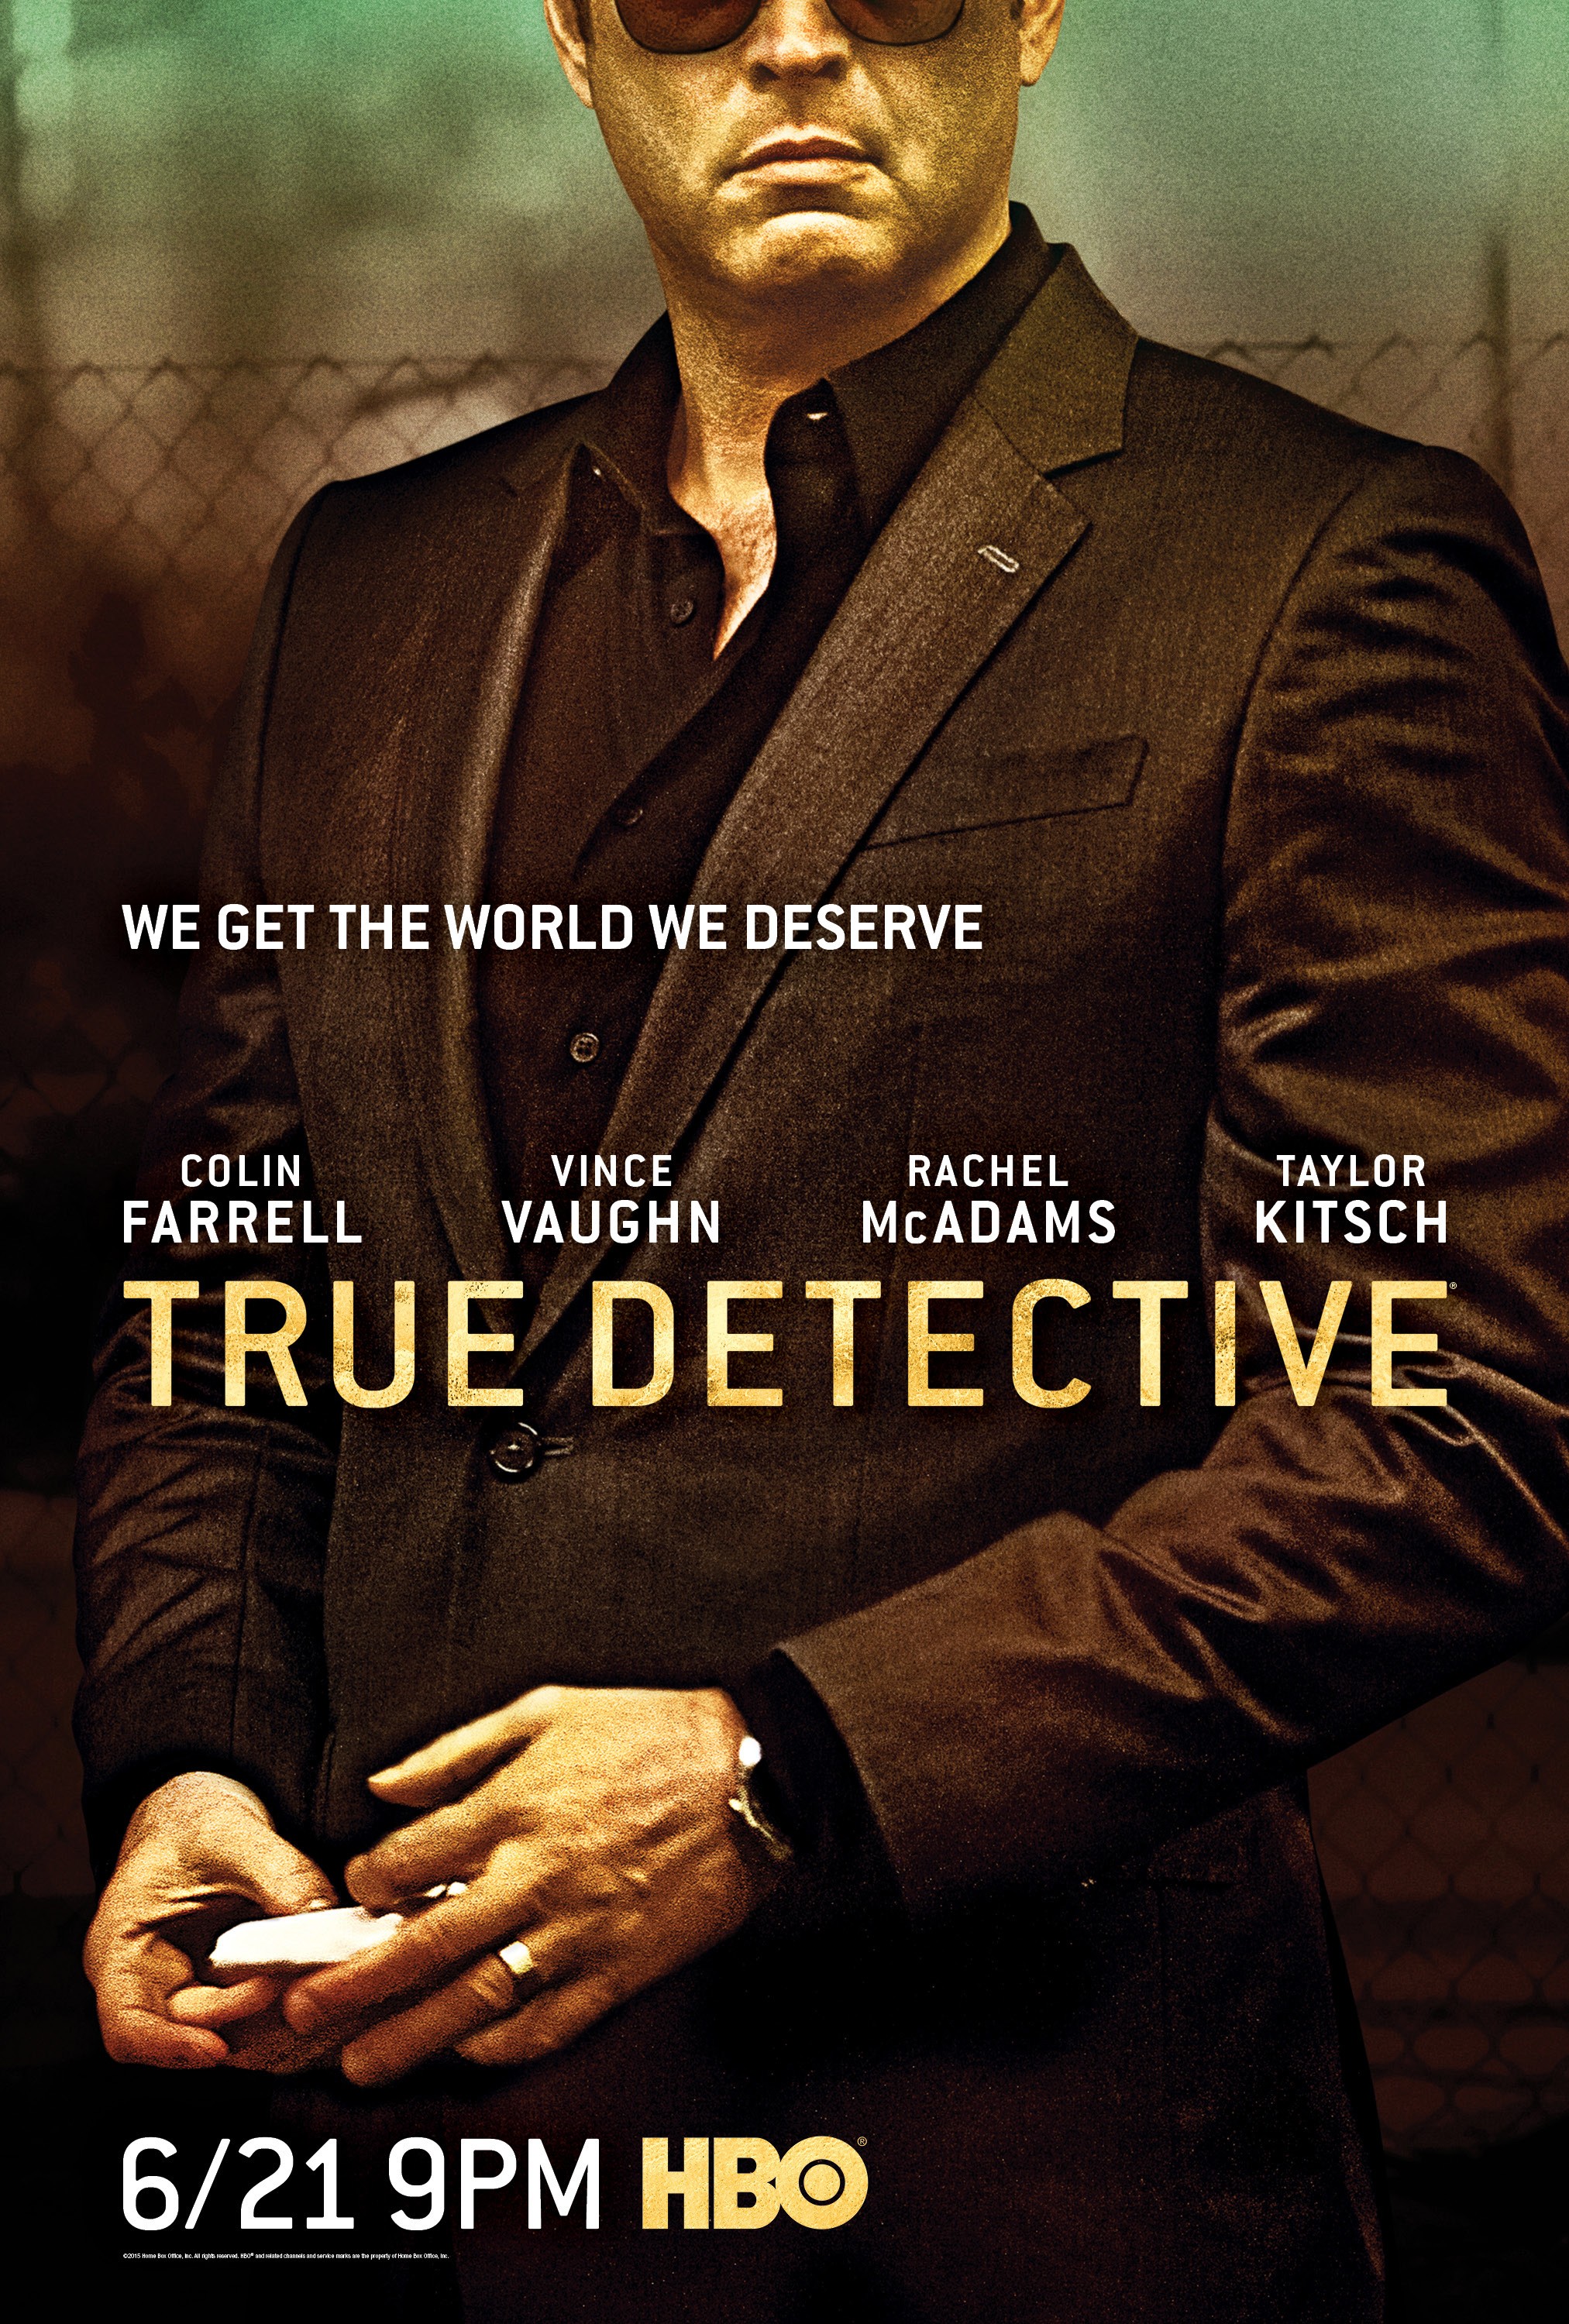 true detective season 1 episode 1 online free